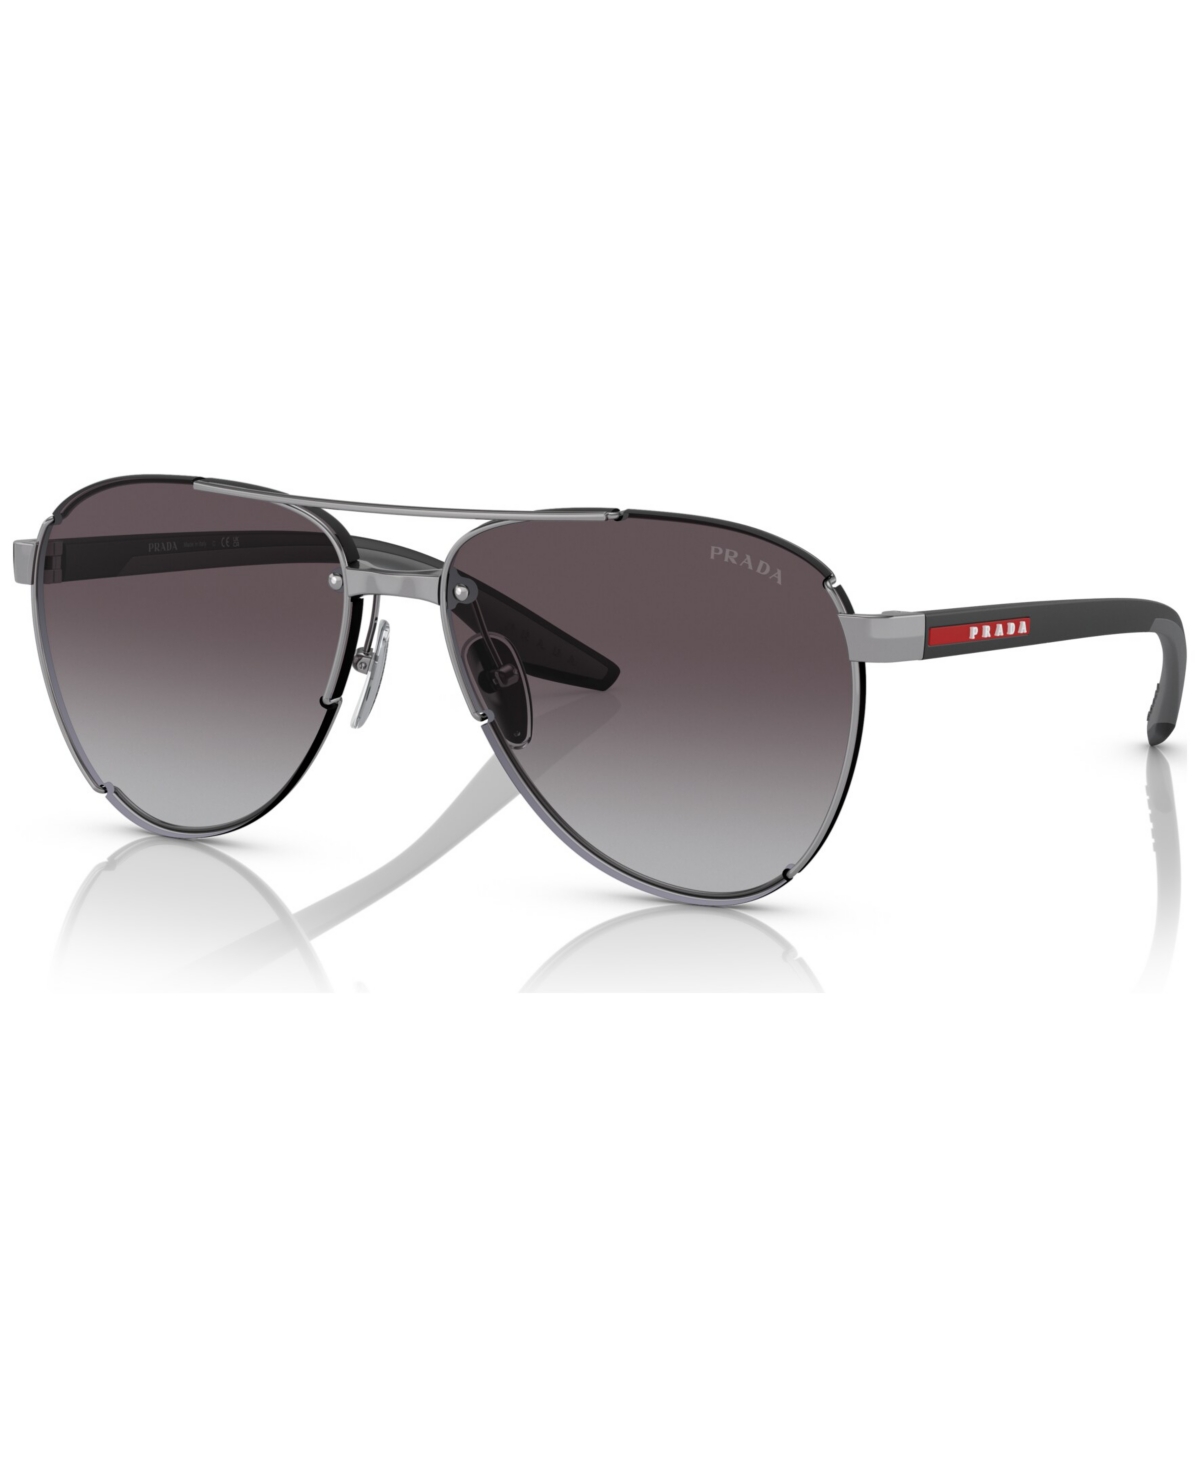 Prada Men's Sunglasses, Ps 51ys61-y In Matte Black